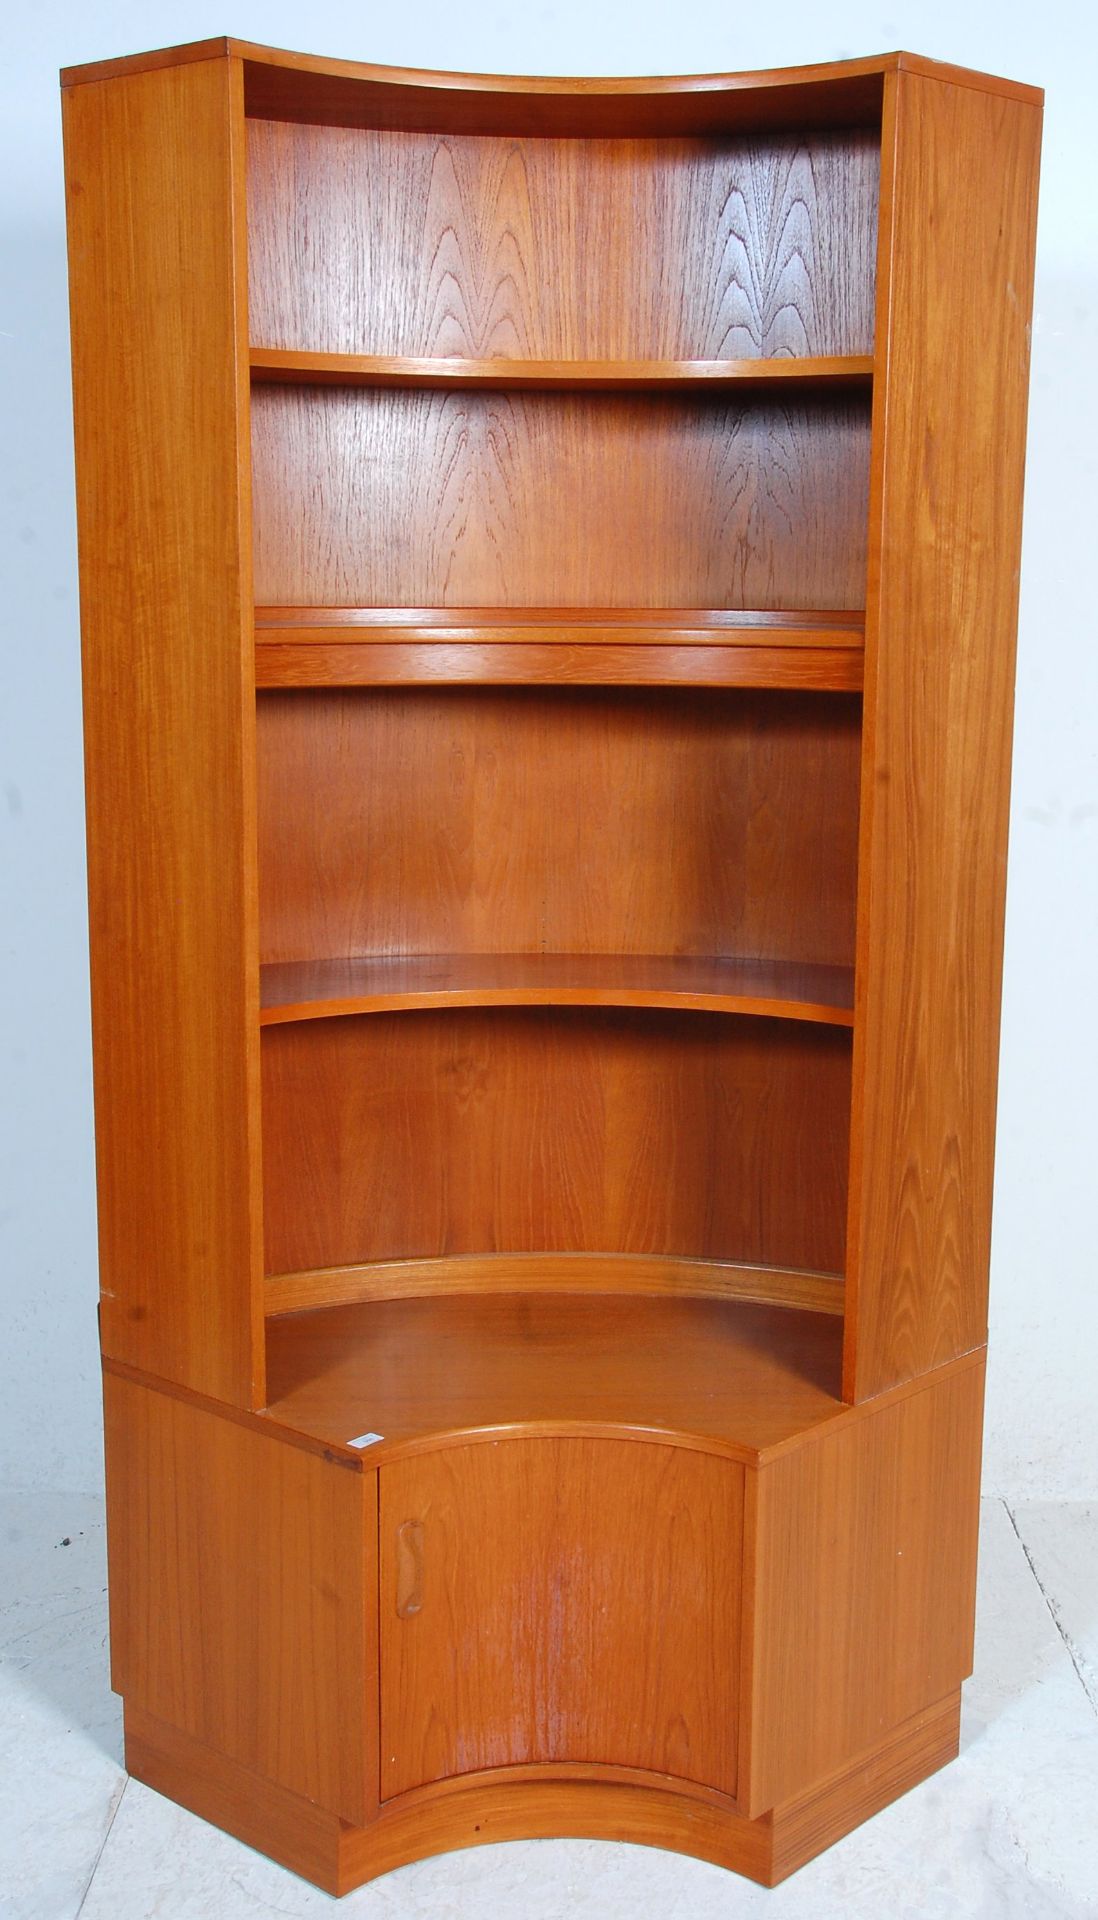 A vintage retro G Plan mid 20th Century teak wood curved corner wall unit book / display shelf